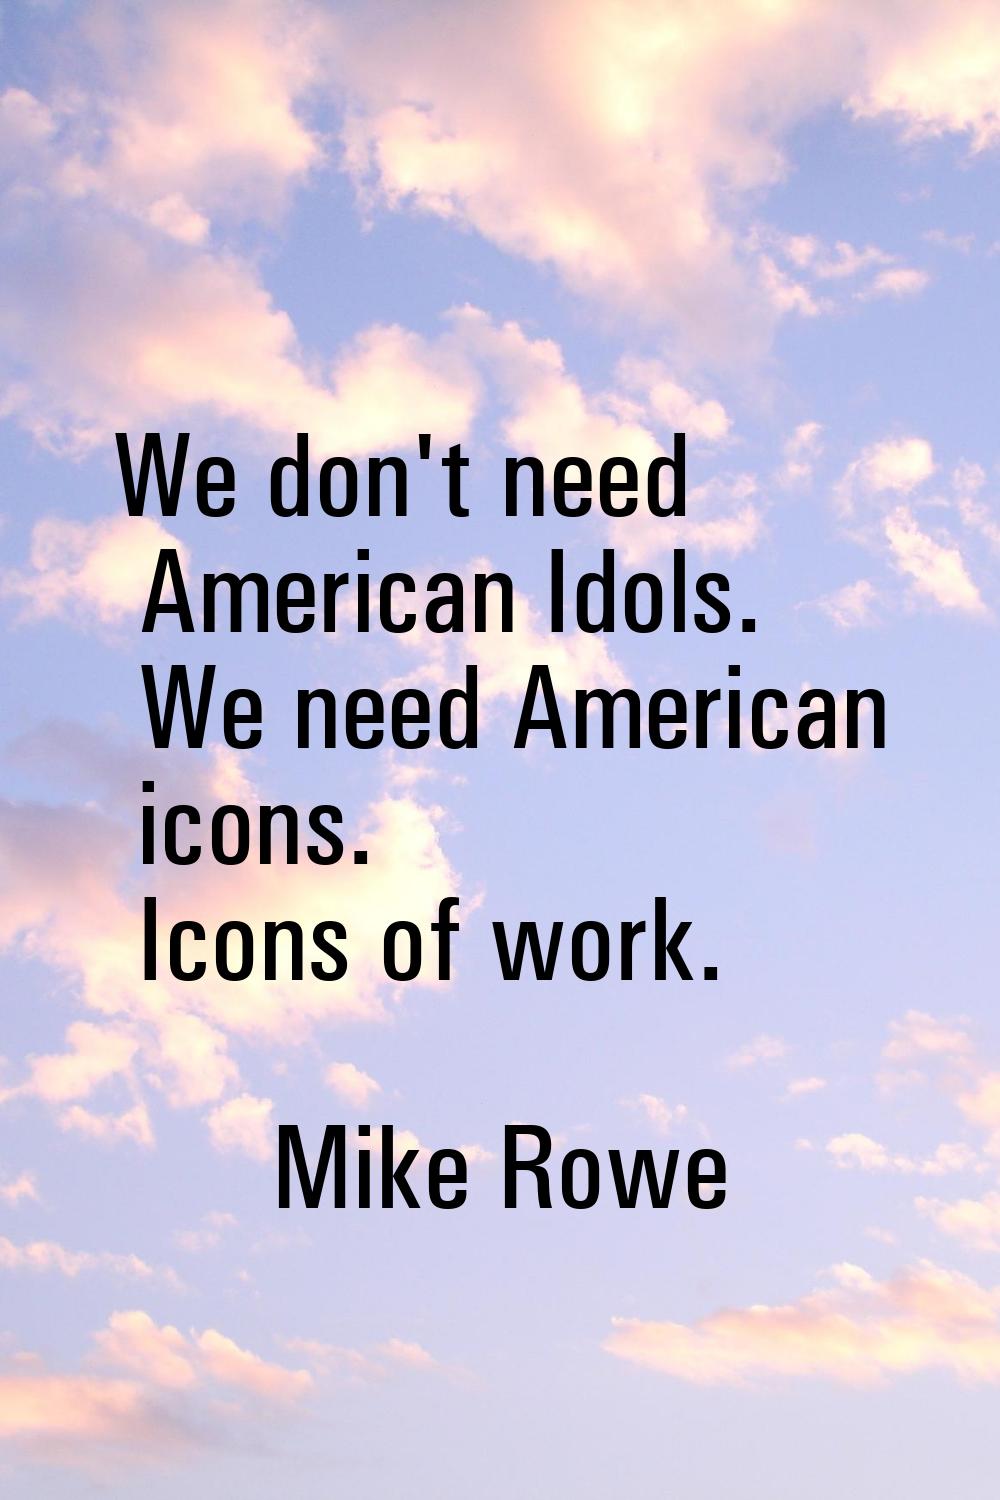 We don't need American Idols. We need American icons. Icons of work.